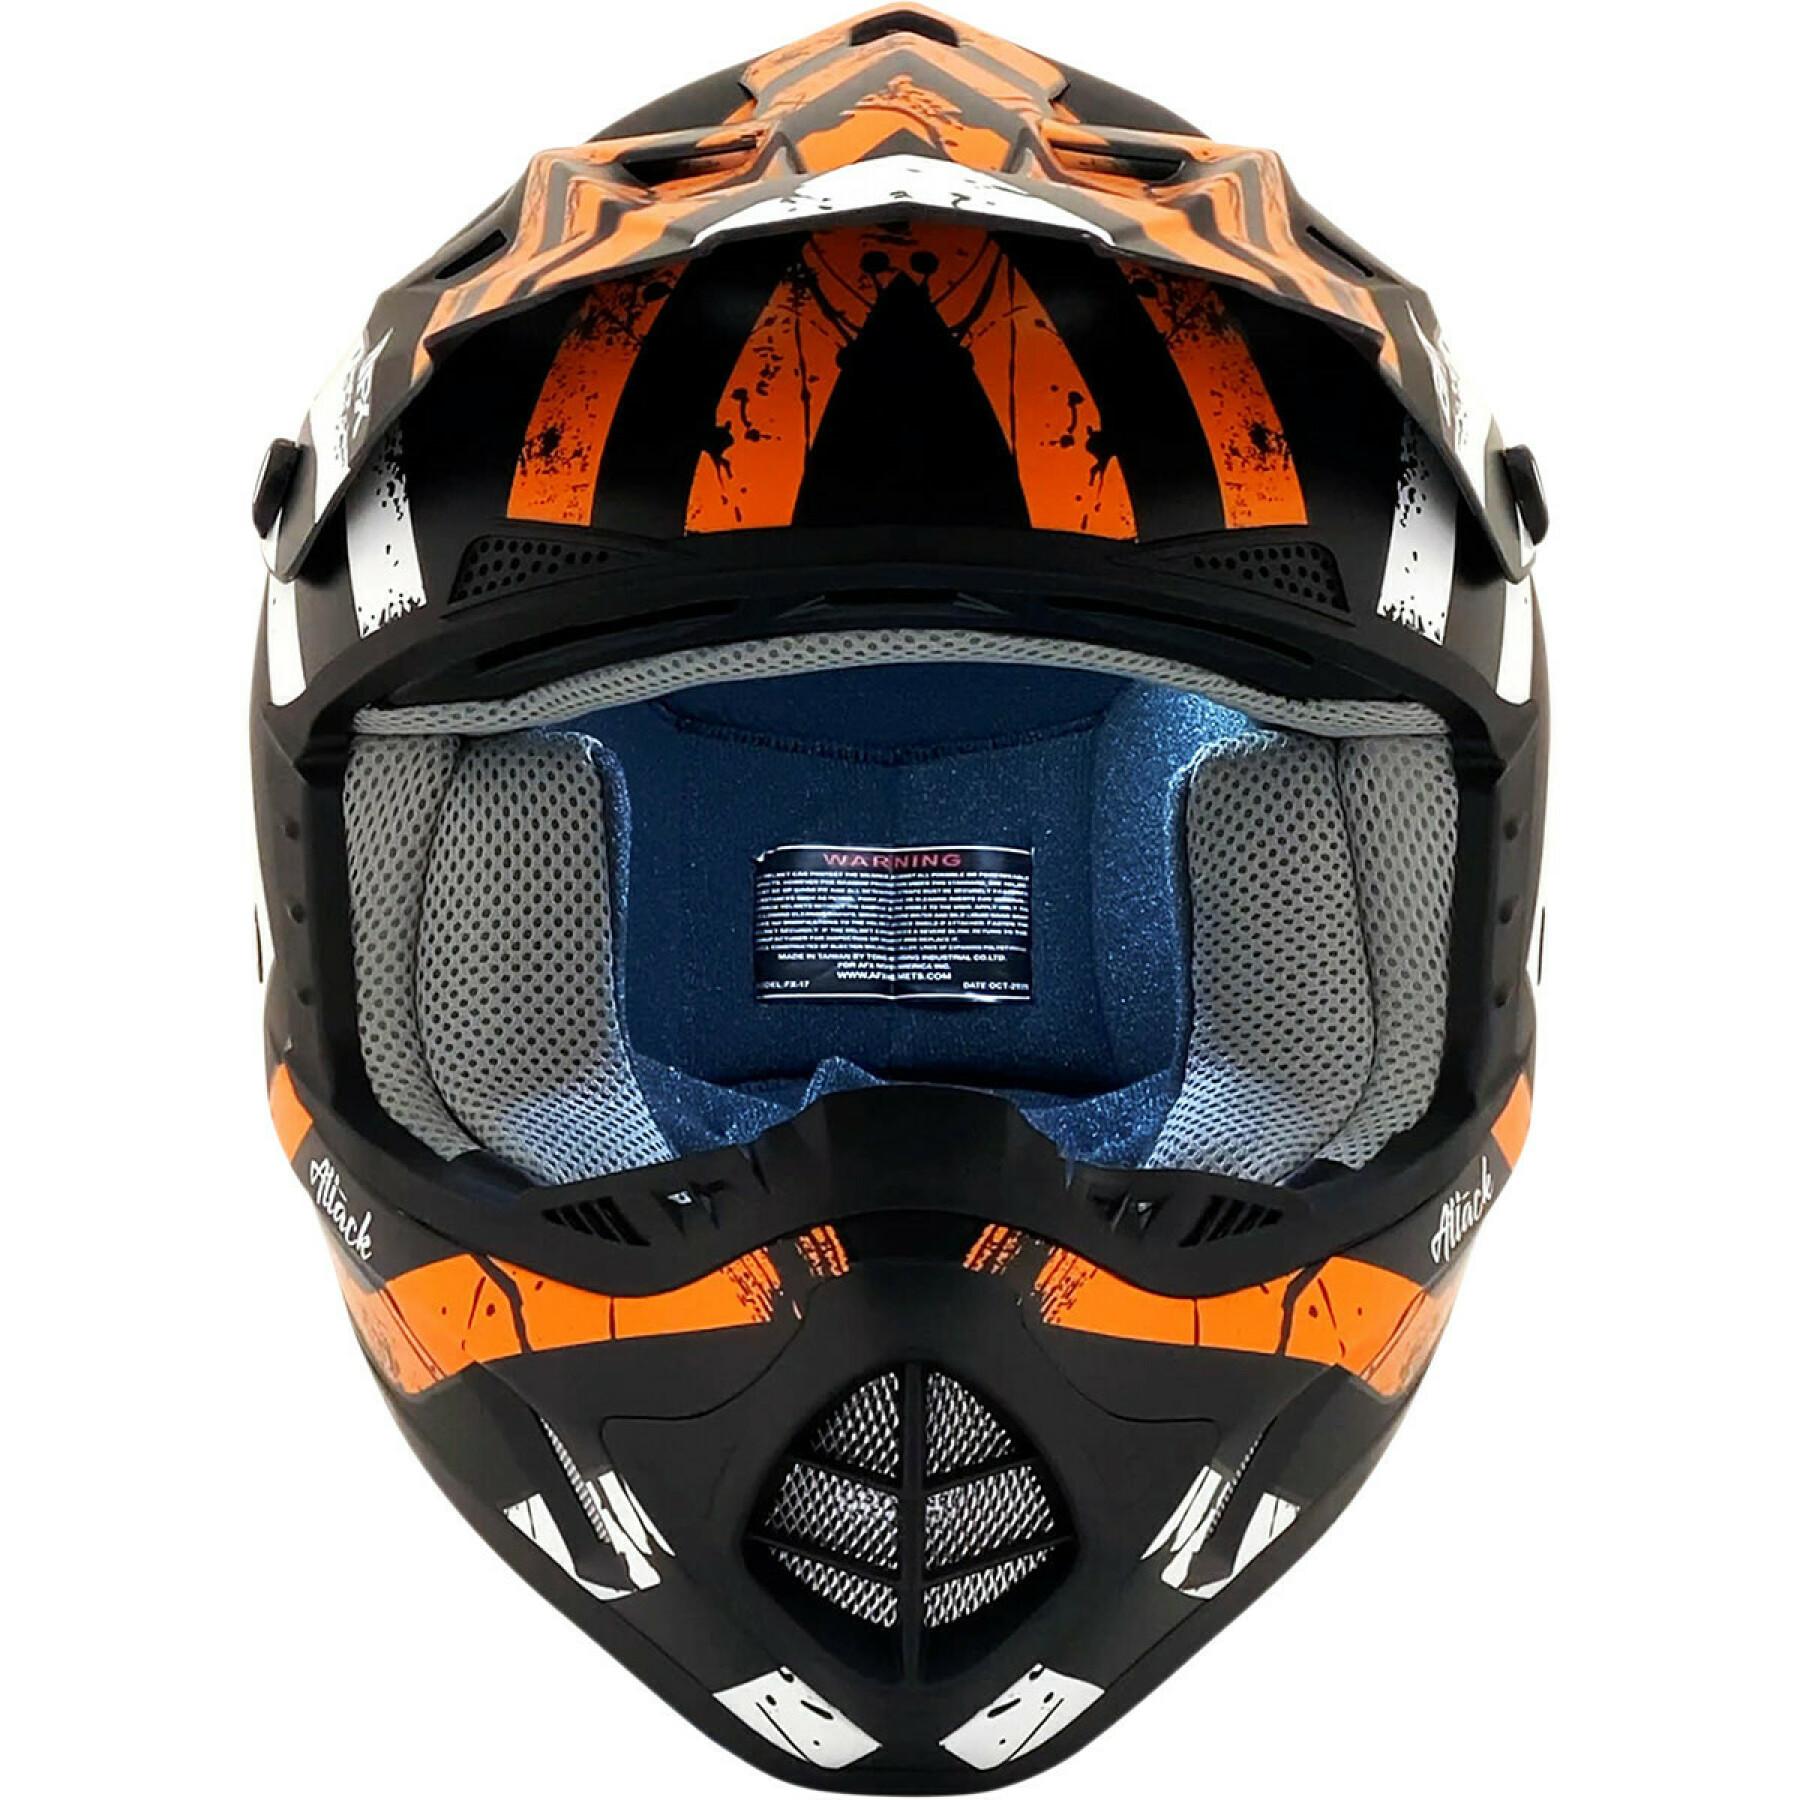 Motorrad-Cross-Helm AFX fx17 atk